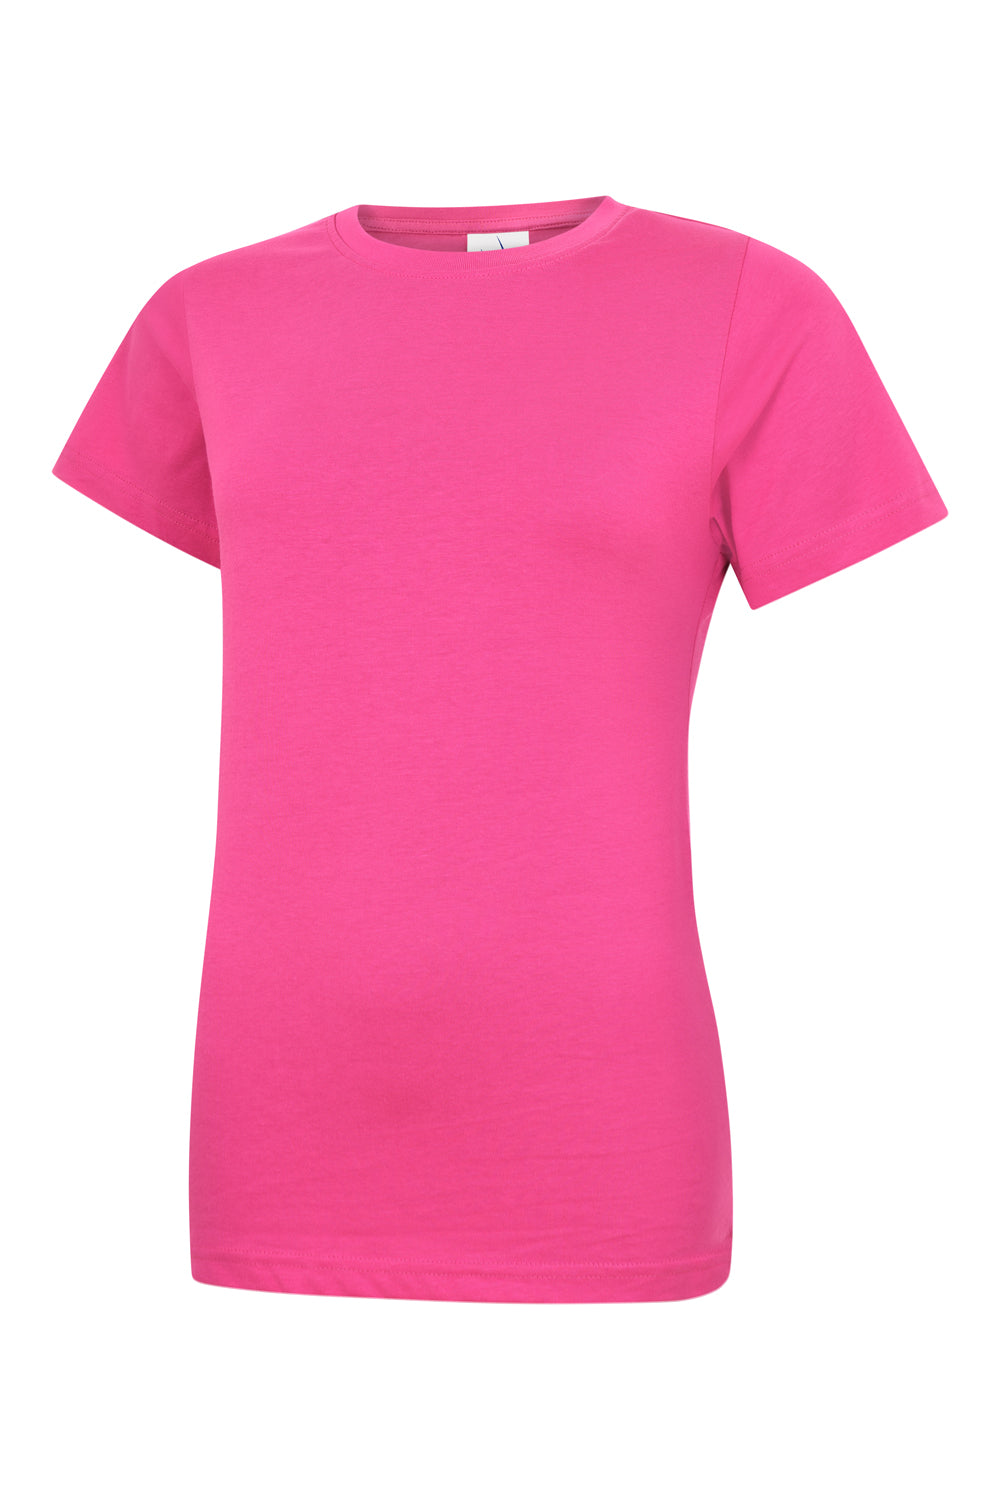 Uneek Ladies Classic Crew Neck T-Shirt UC318 - Hot Pink